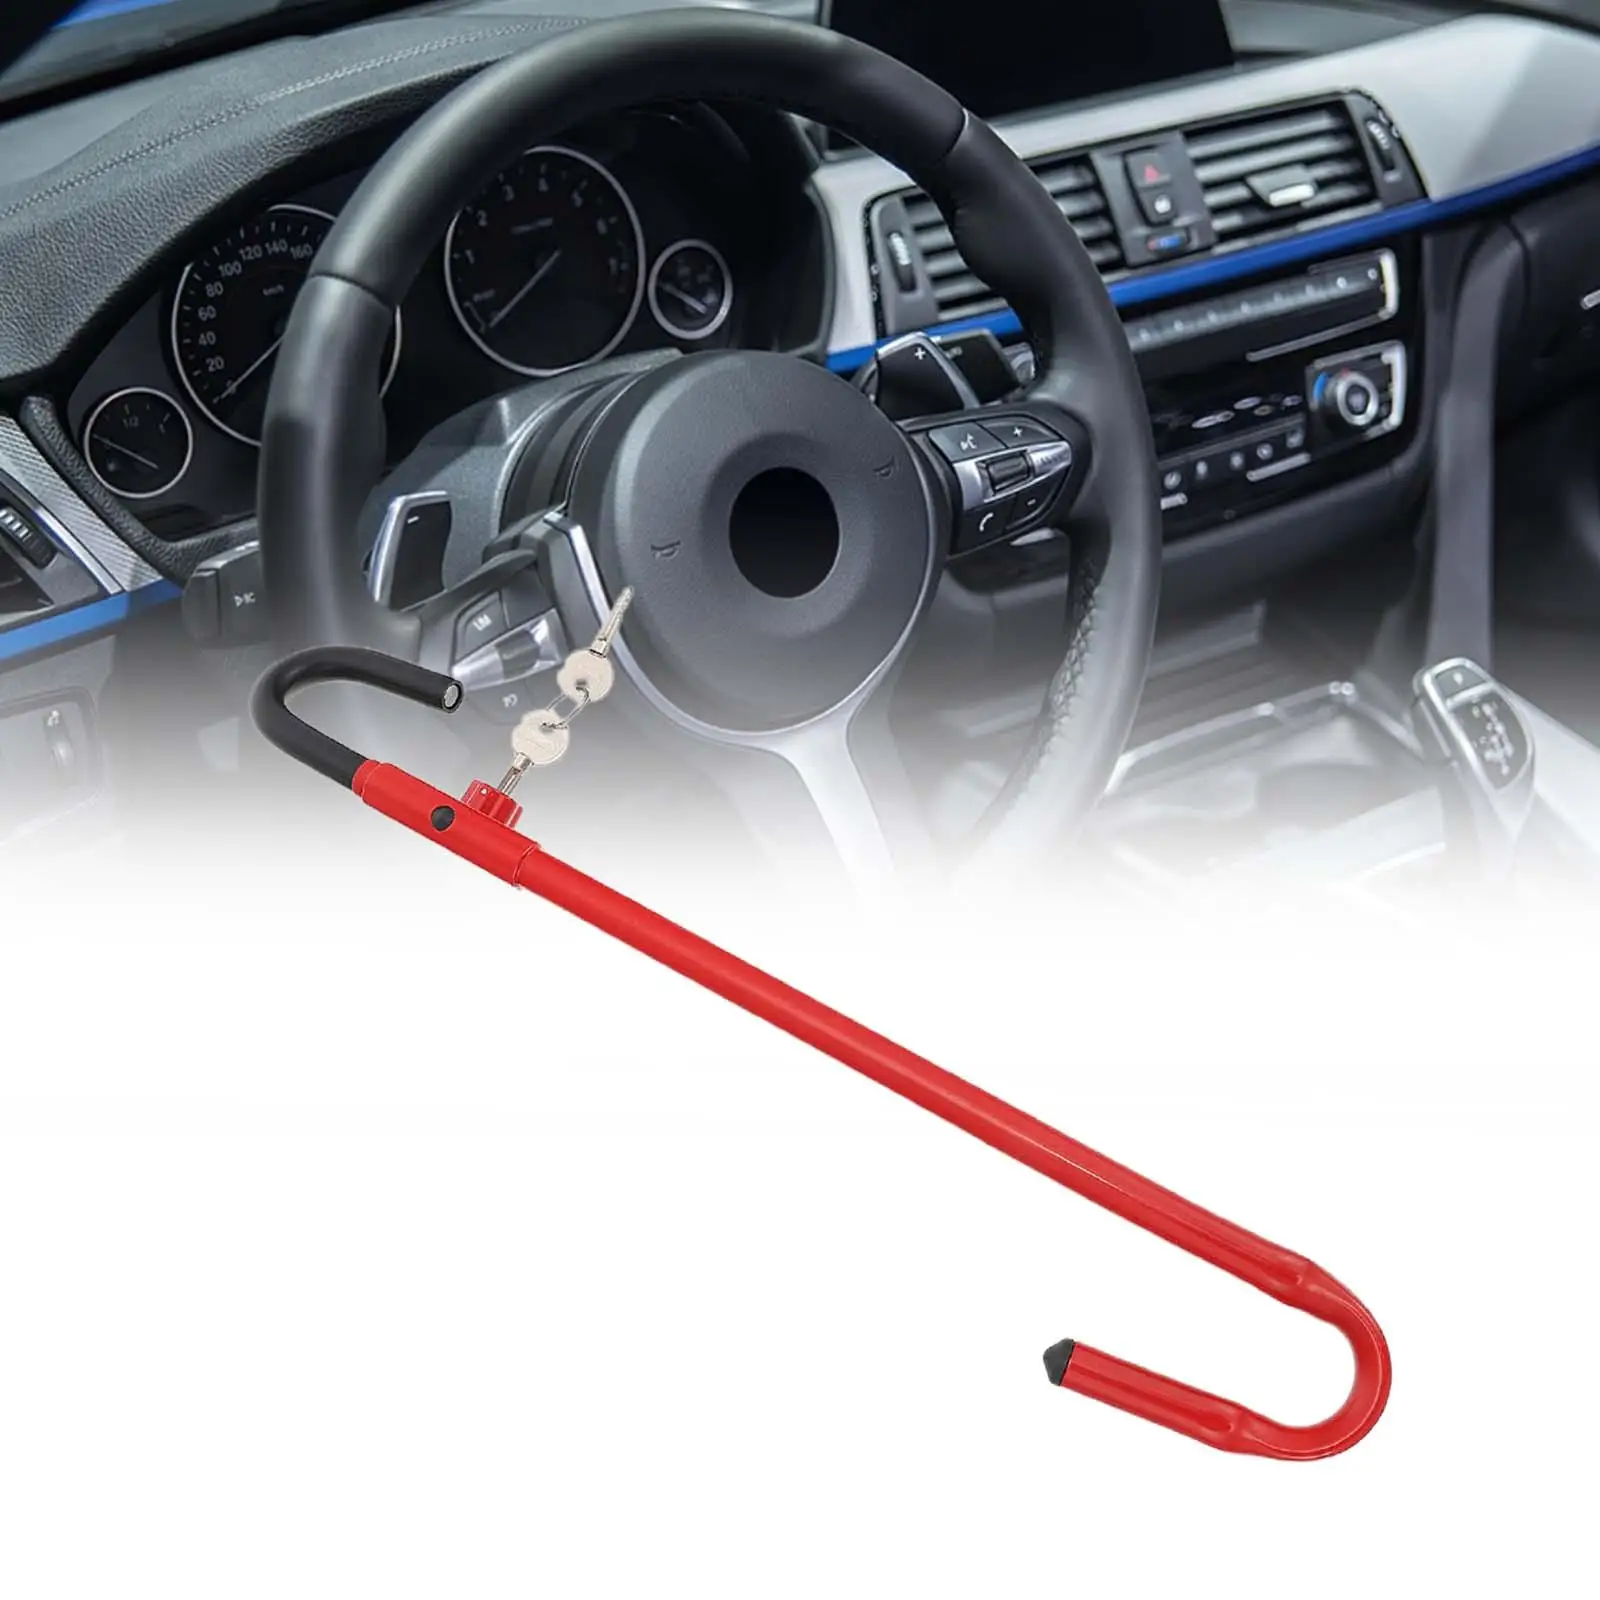 Car Steering Wheel to Brake Pedal Lock Security Lock for SUV Car Trucks